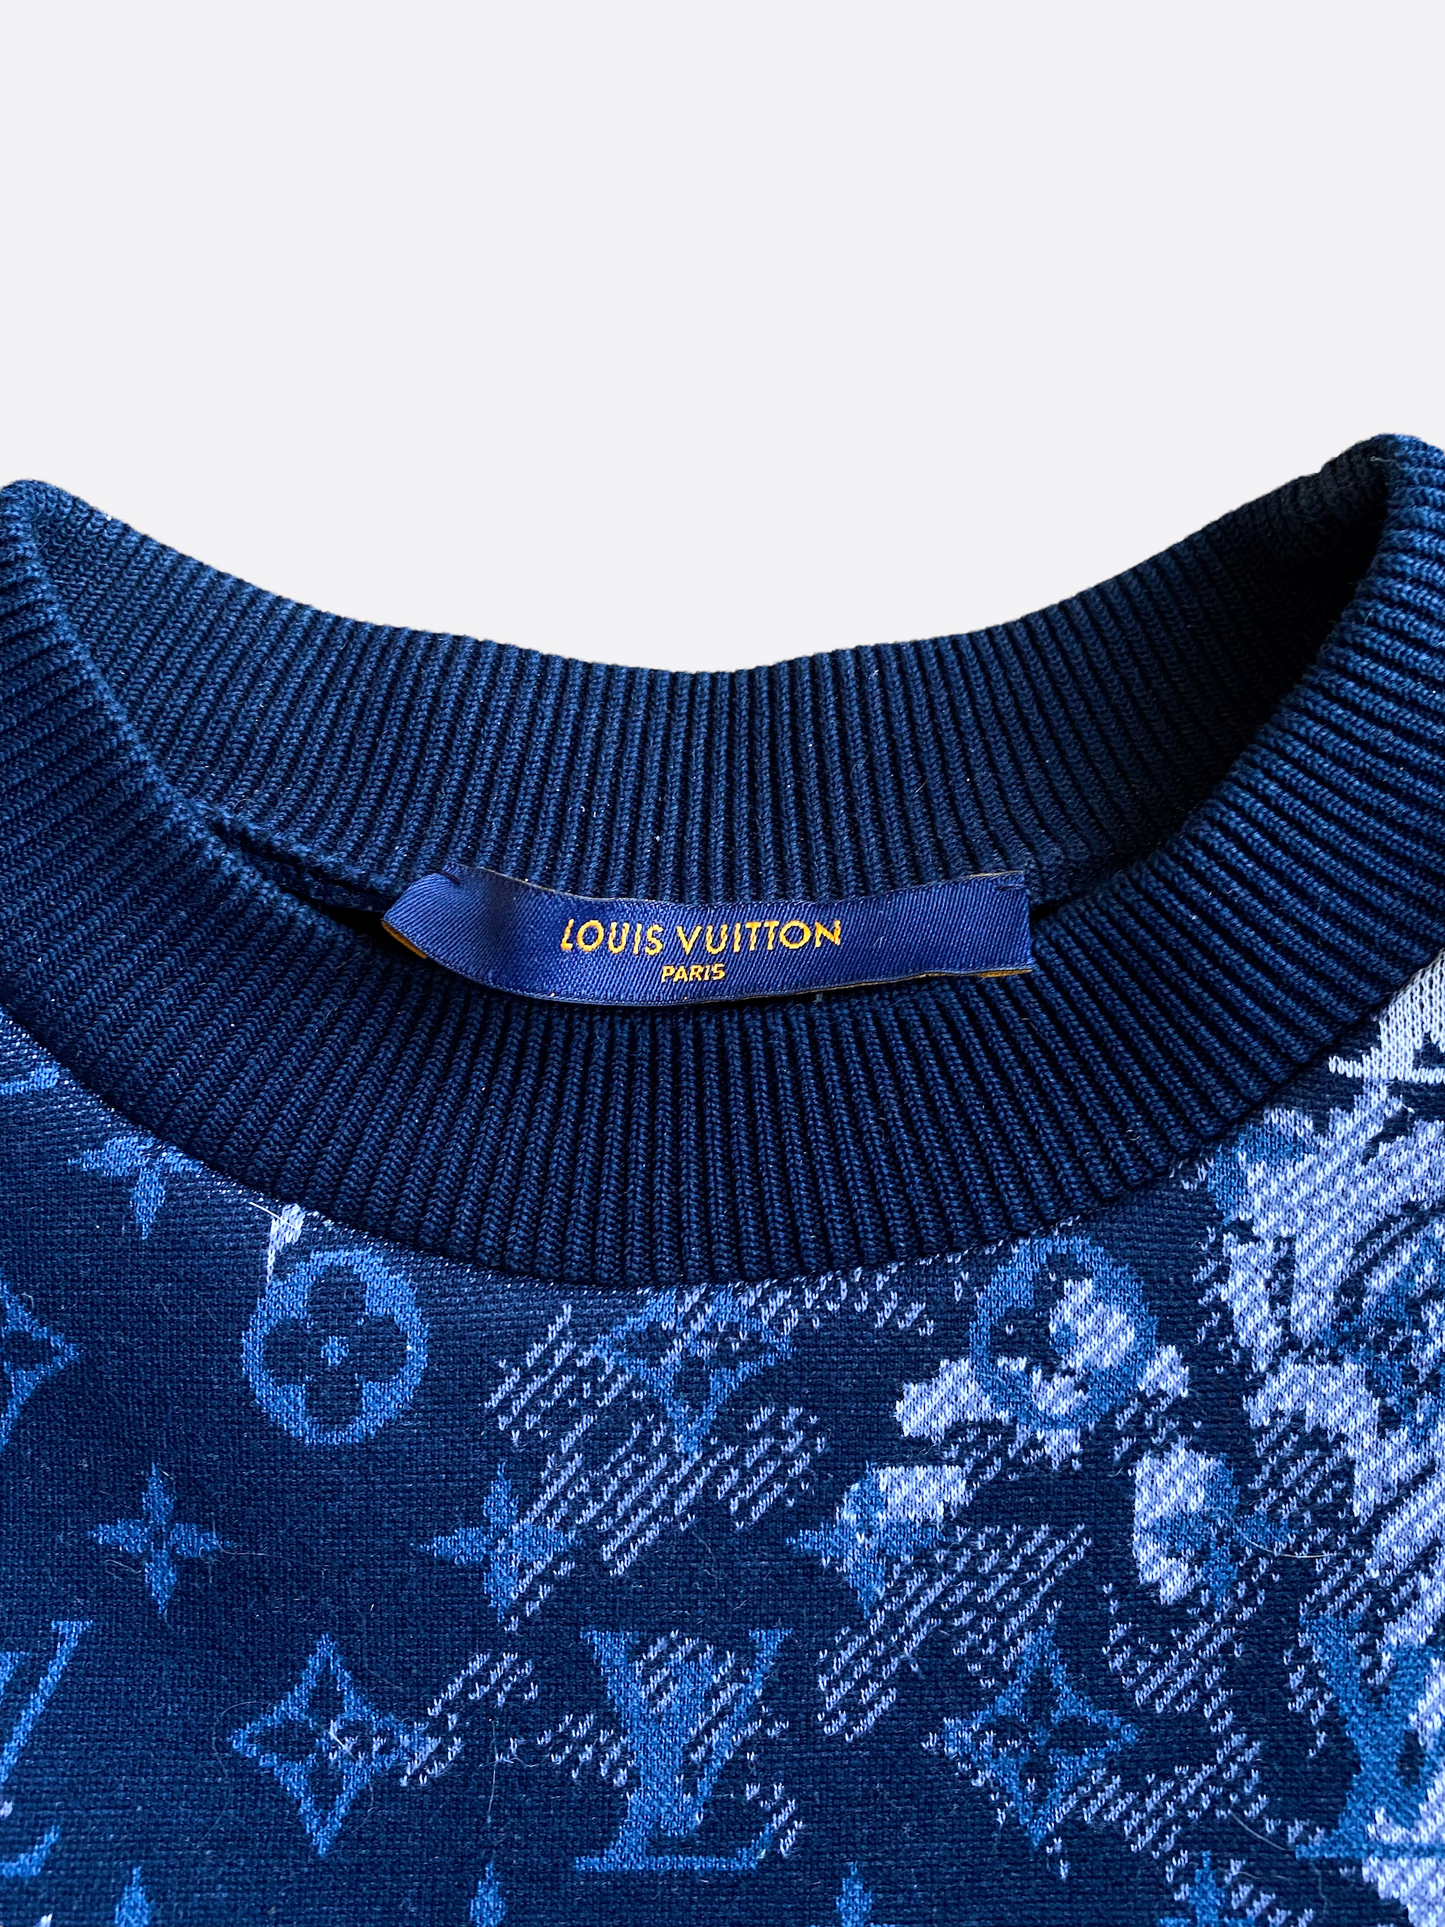 Louis Vuitton Tapestry Monogram Sweatshirt Size Xs L3A61